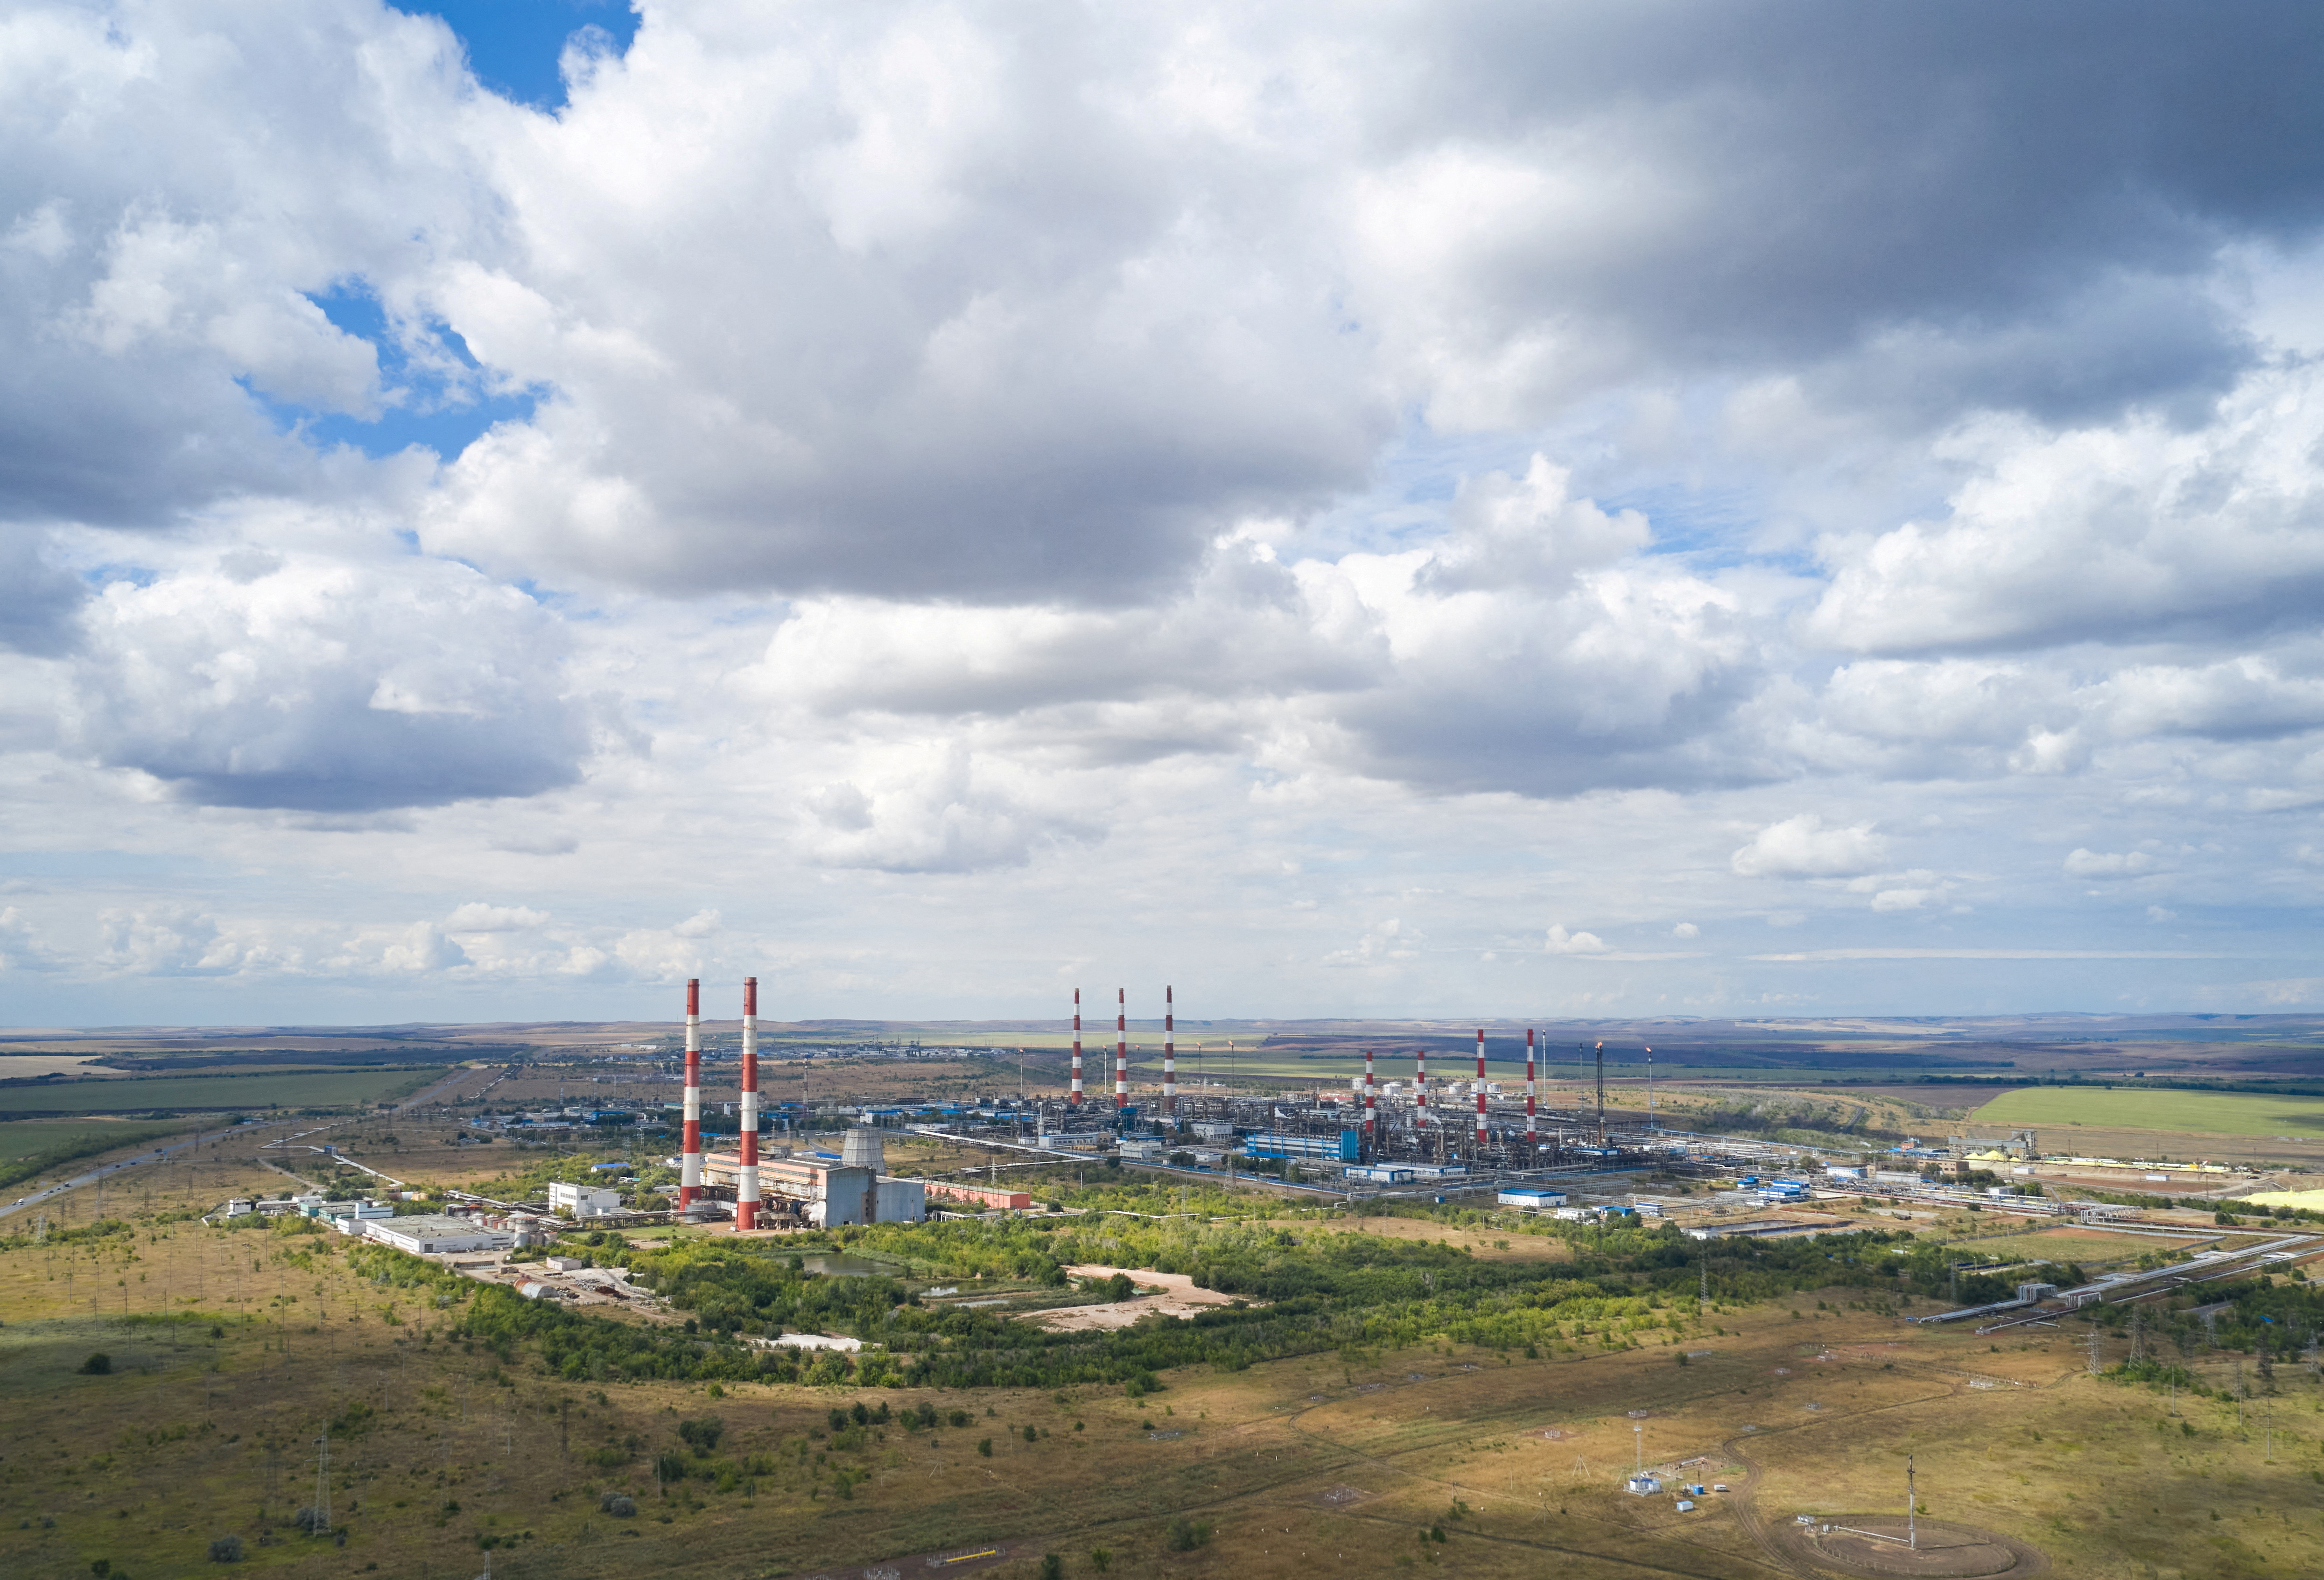 A view shows the Orenburg gas processing plant in Orenburg Region